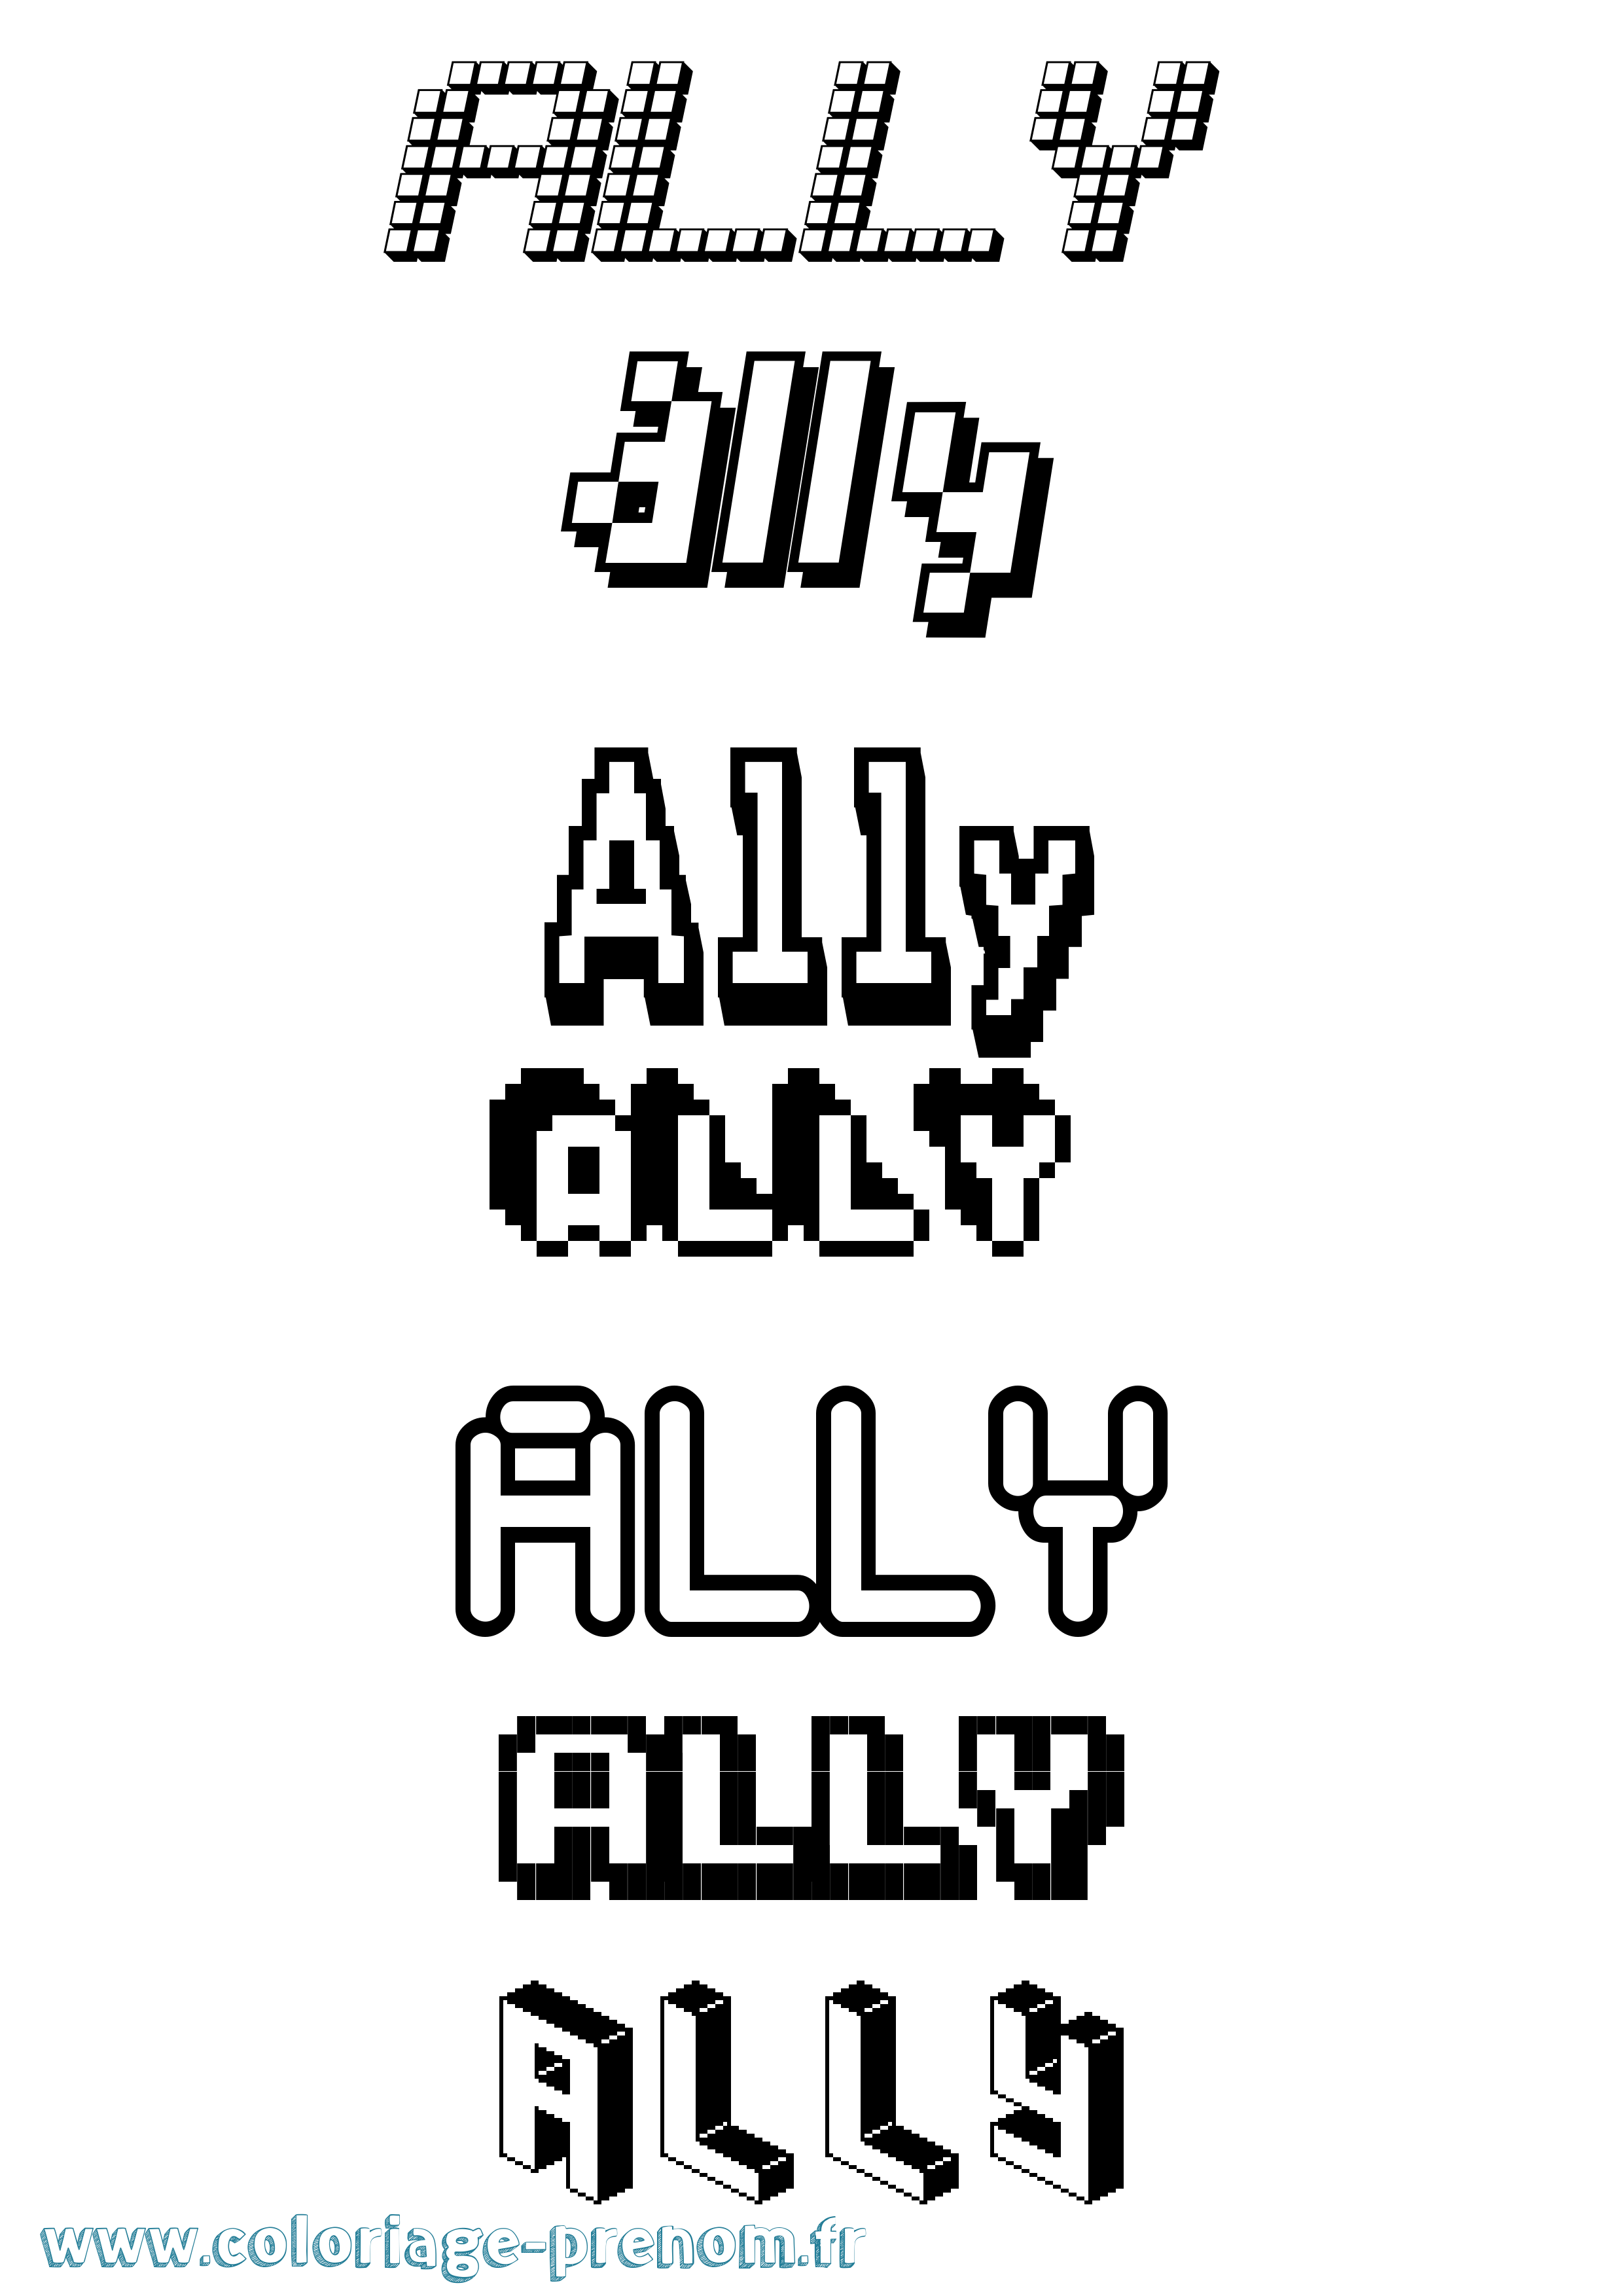 Coloriage prénom Ally Pixel